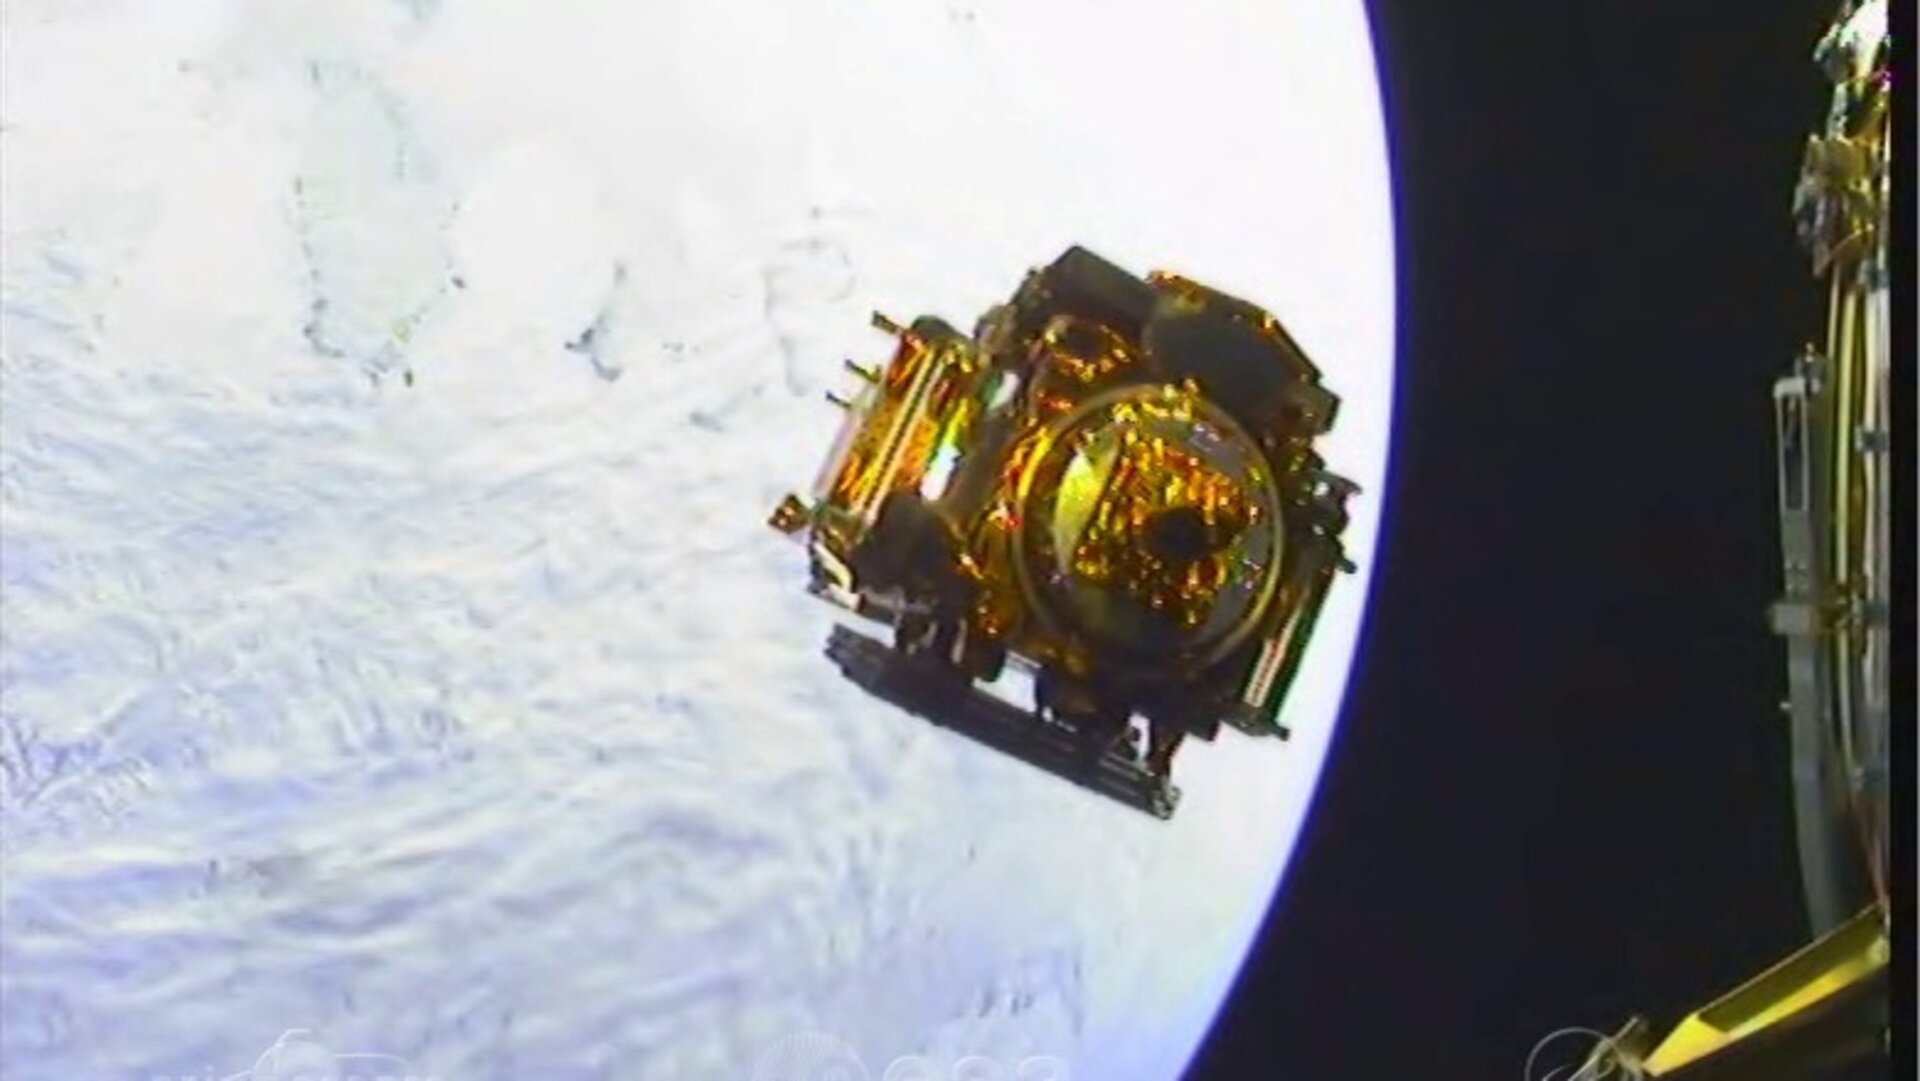 Soyuz Fregat on-board cameras show release of Sentinel-1A